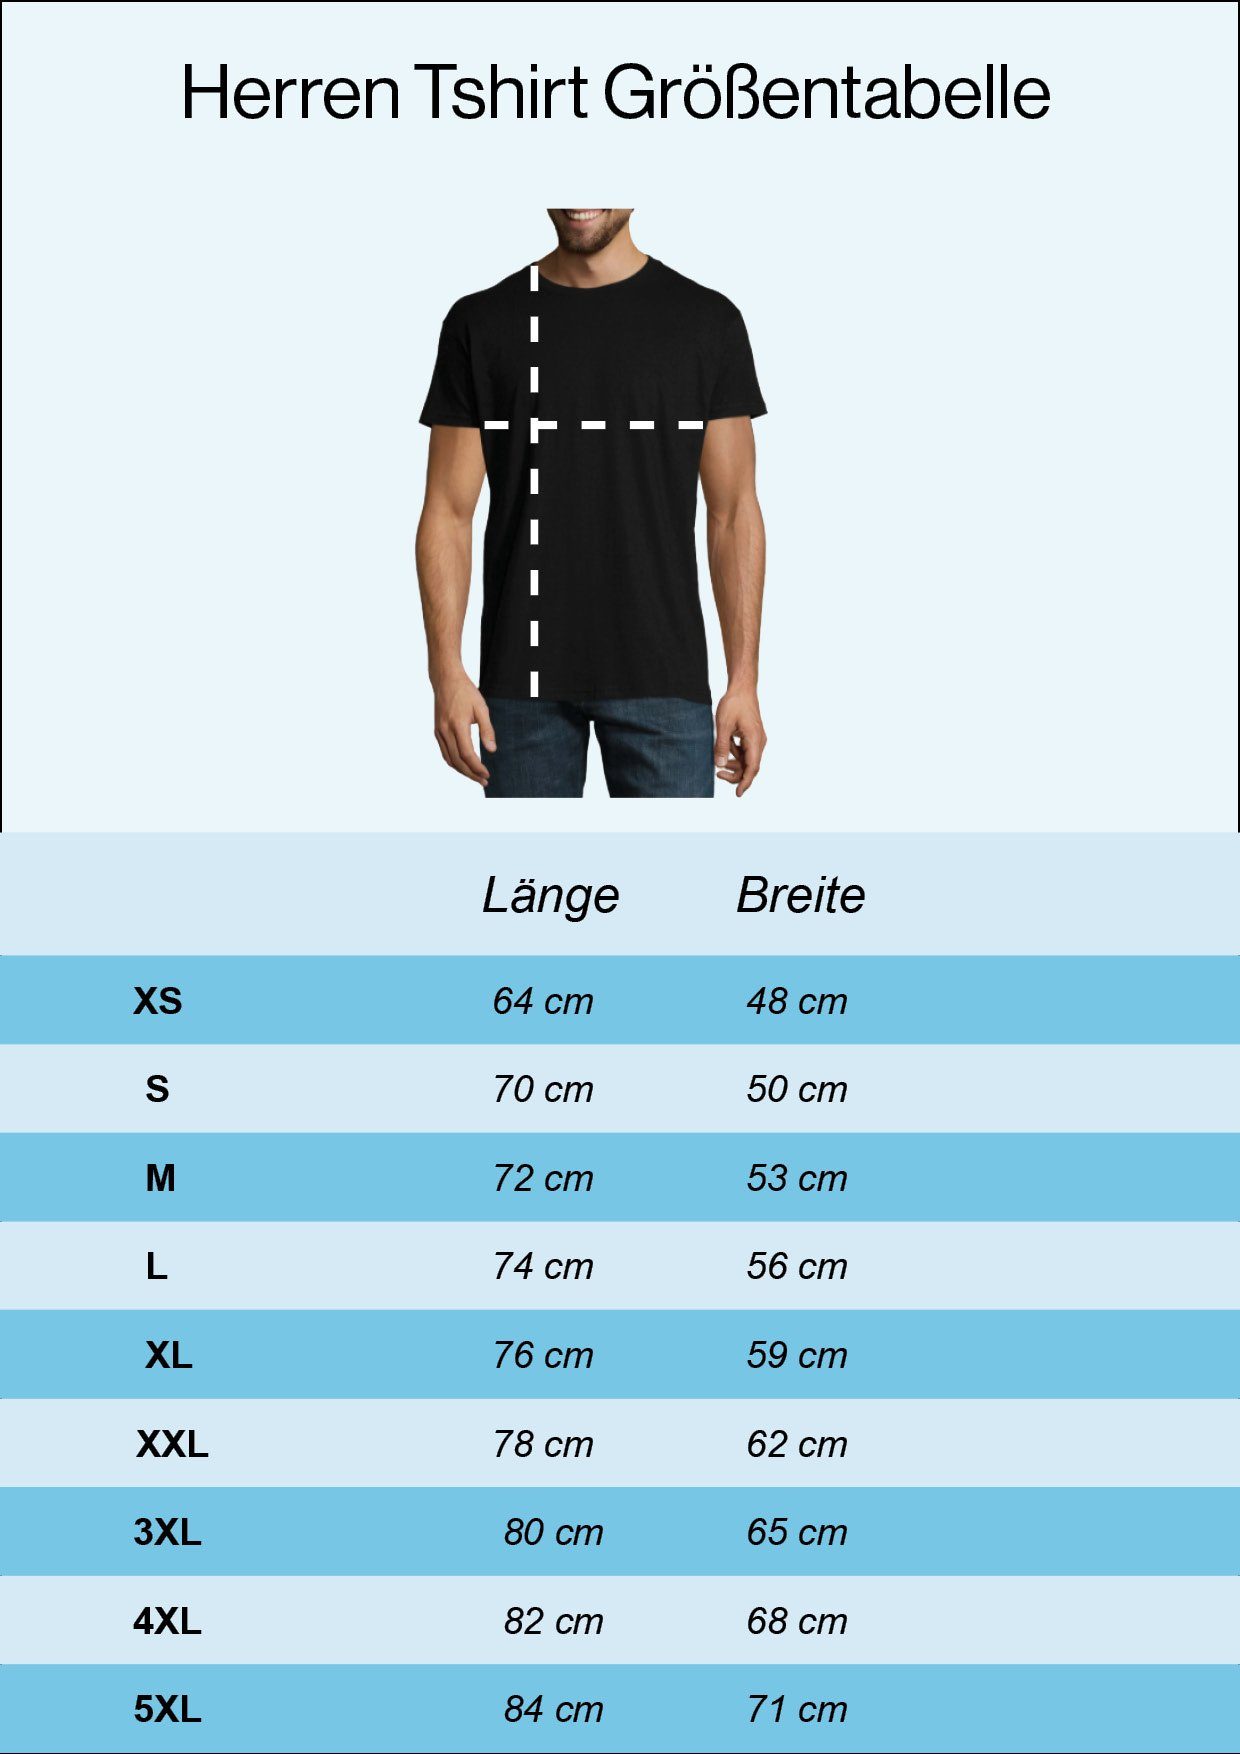 Youth Designz T-Shirt Official Herren Faultier Shirt Yoga mit Frontprint Schwarz lustigem